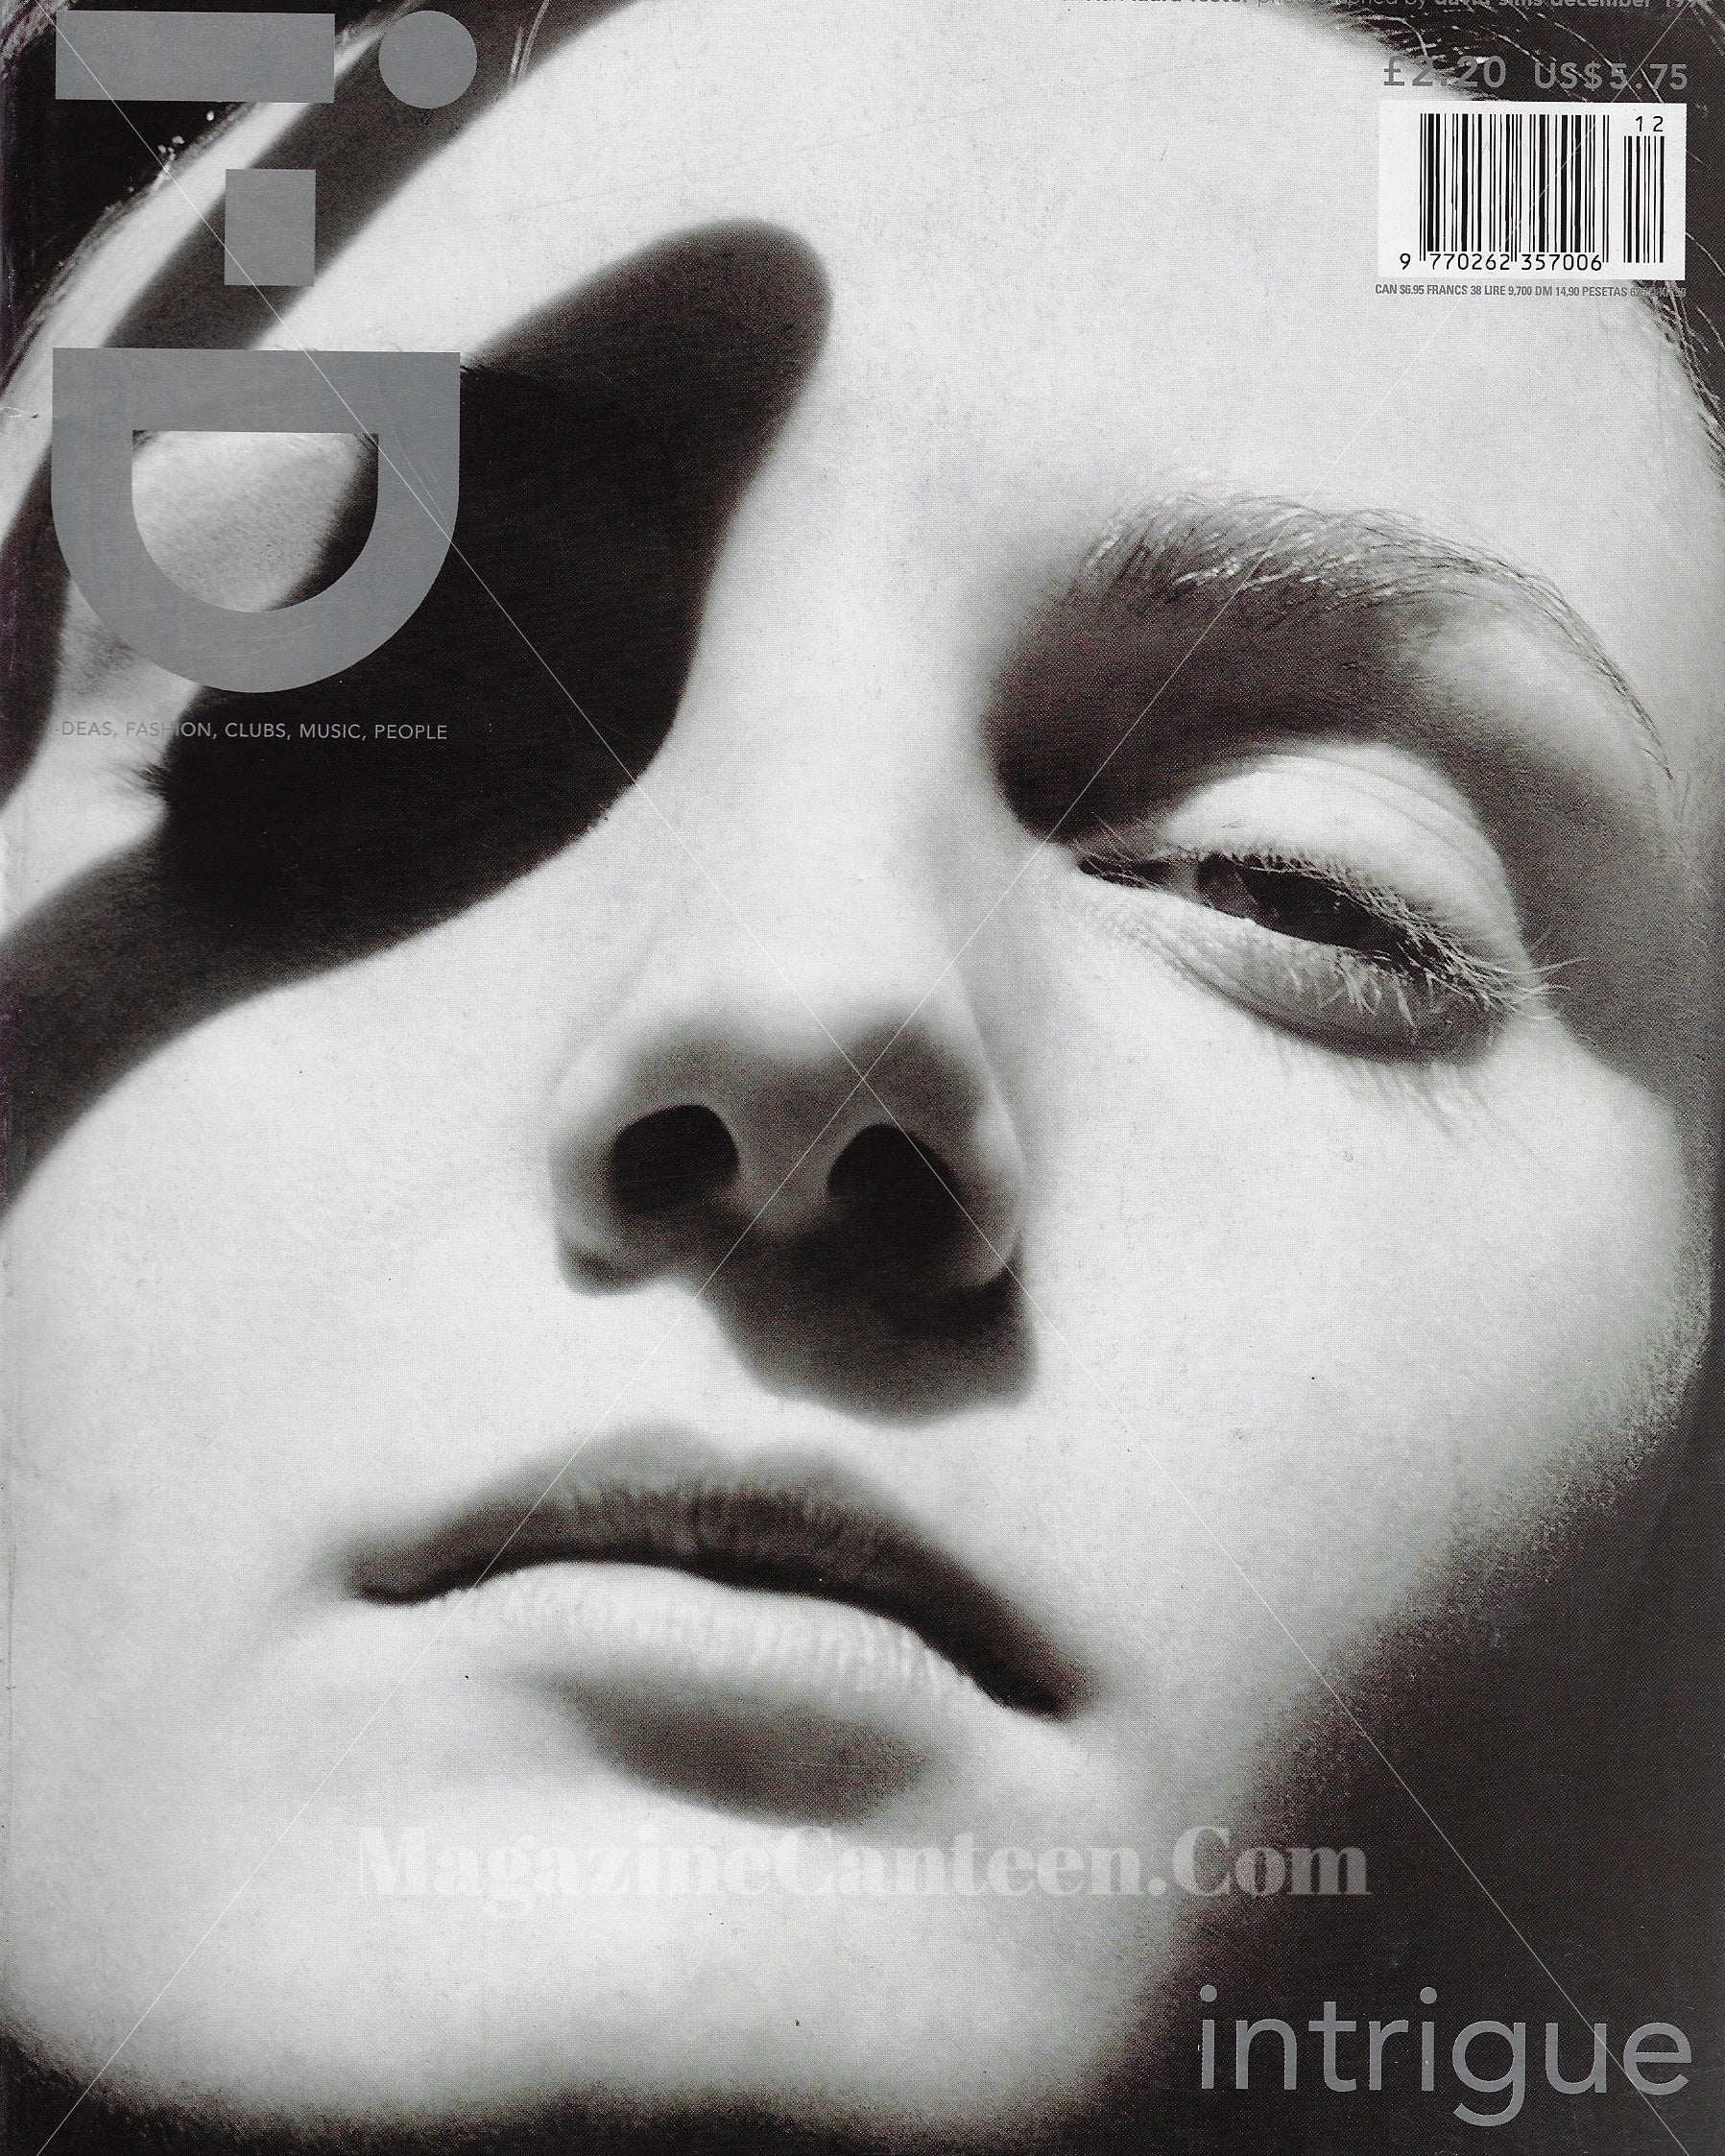 I-D Magazine 171 - Laura Foster 1997